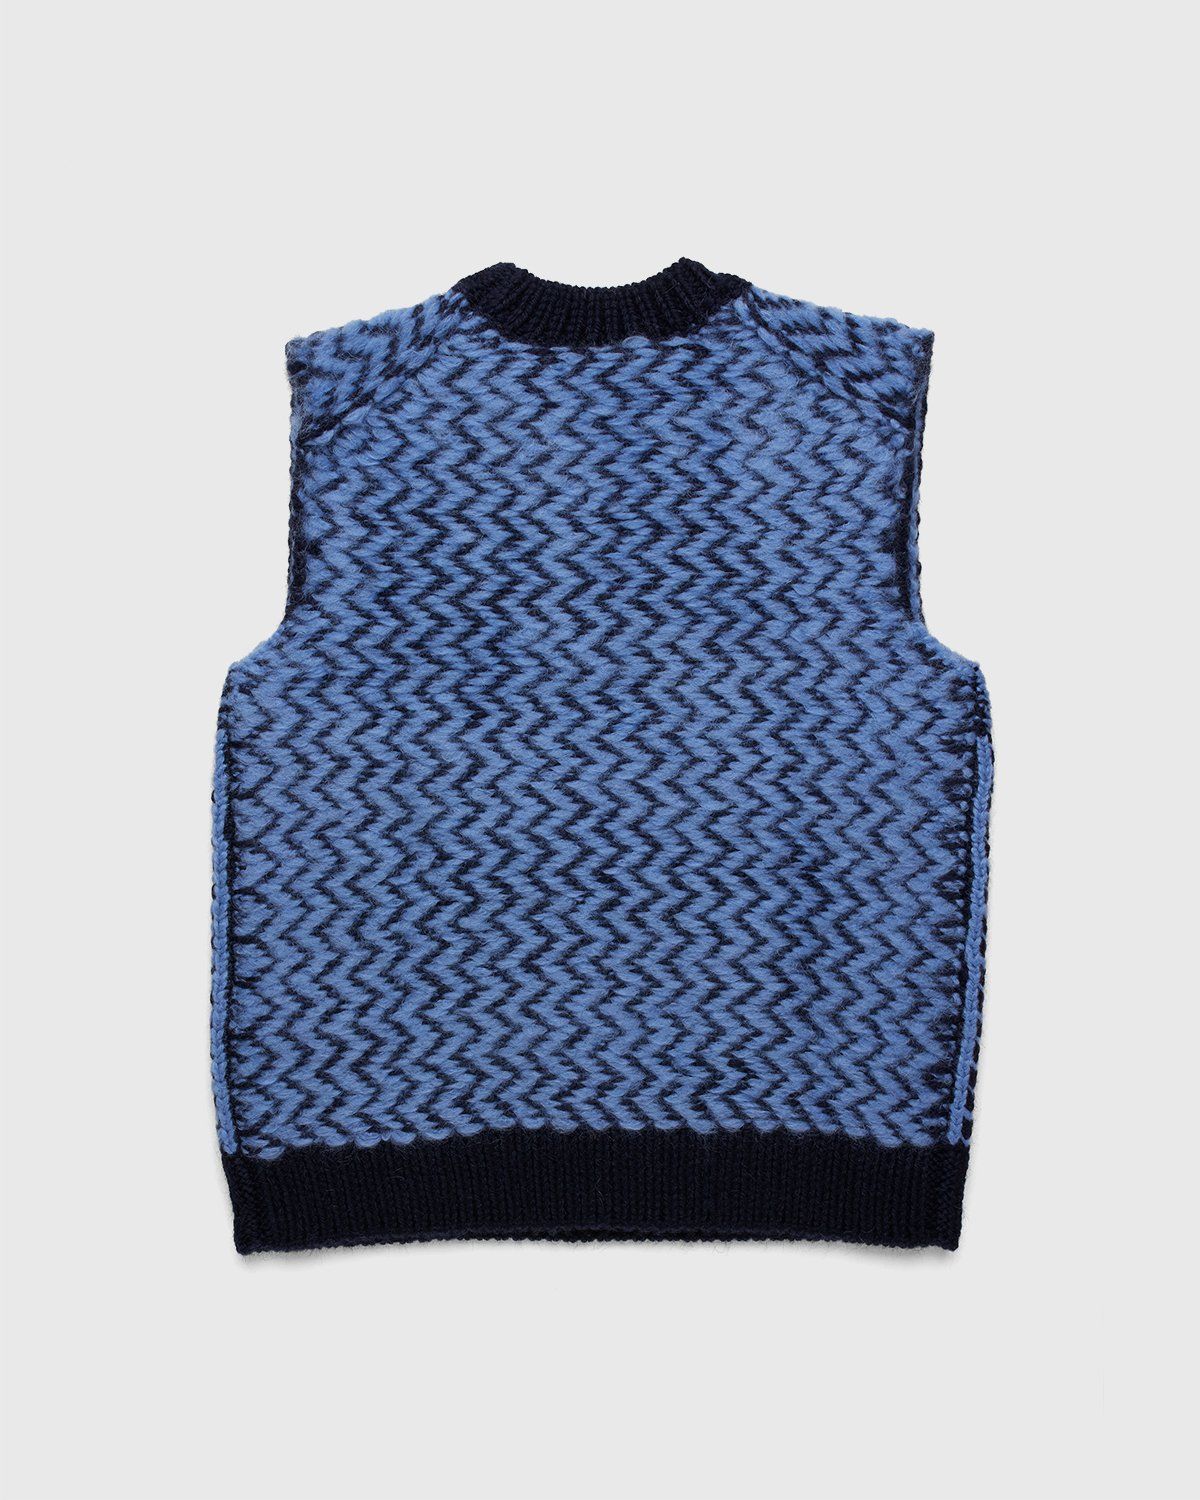 Jil Sander – Vest Knitted Blue - Knitwear - Blue - Image 2